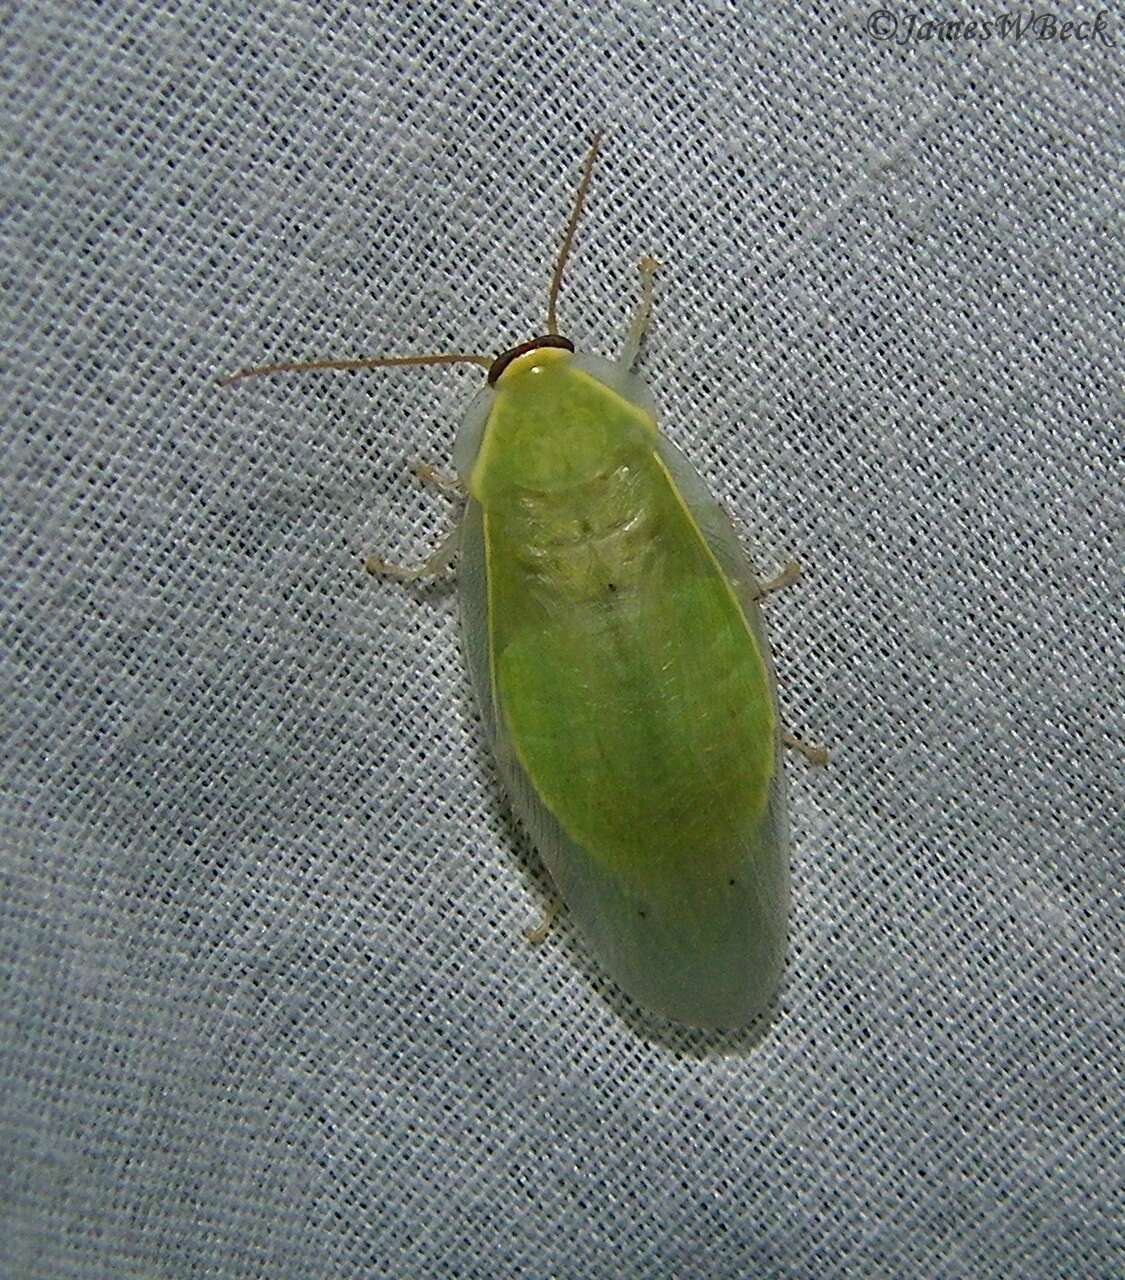 Image of Green Banana Cockroach